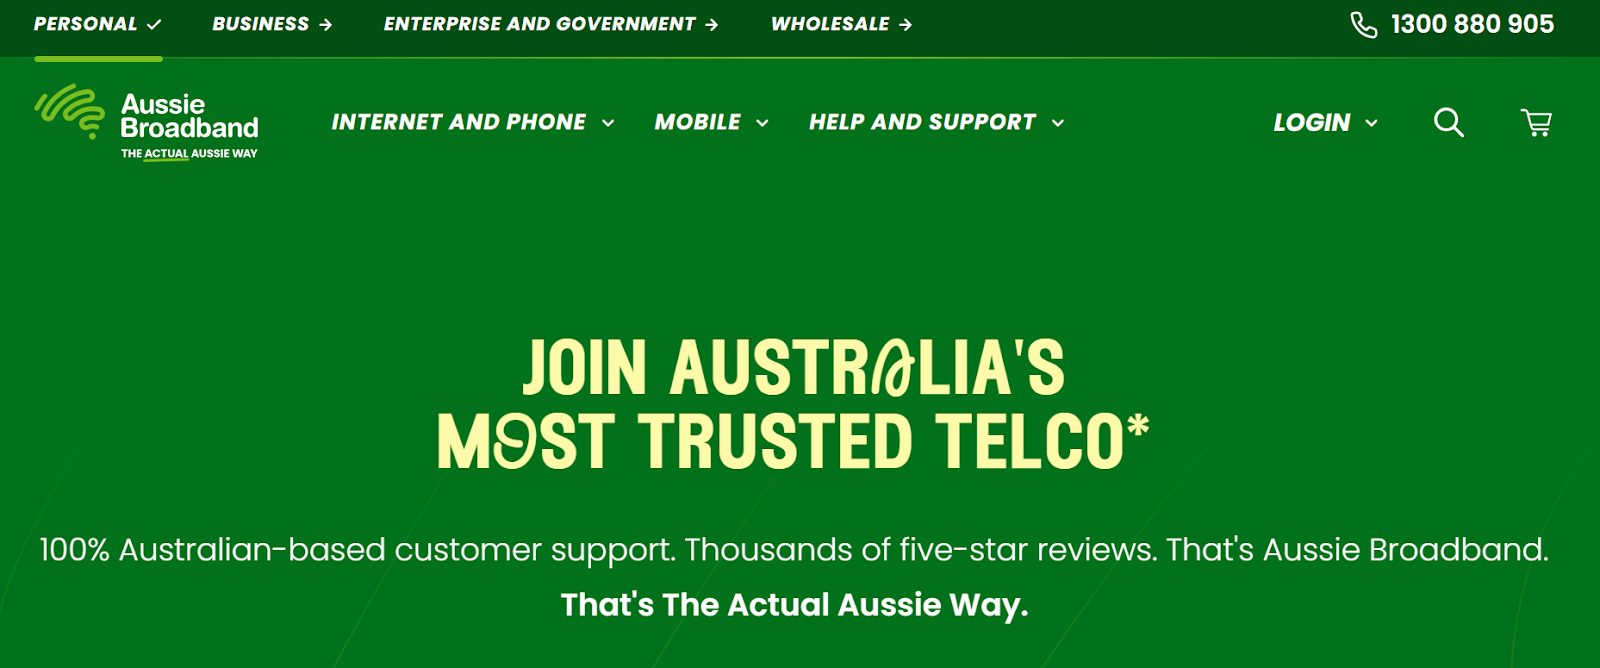 Ausiie Broadband website snapshot highlighting the services it offers.